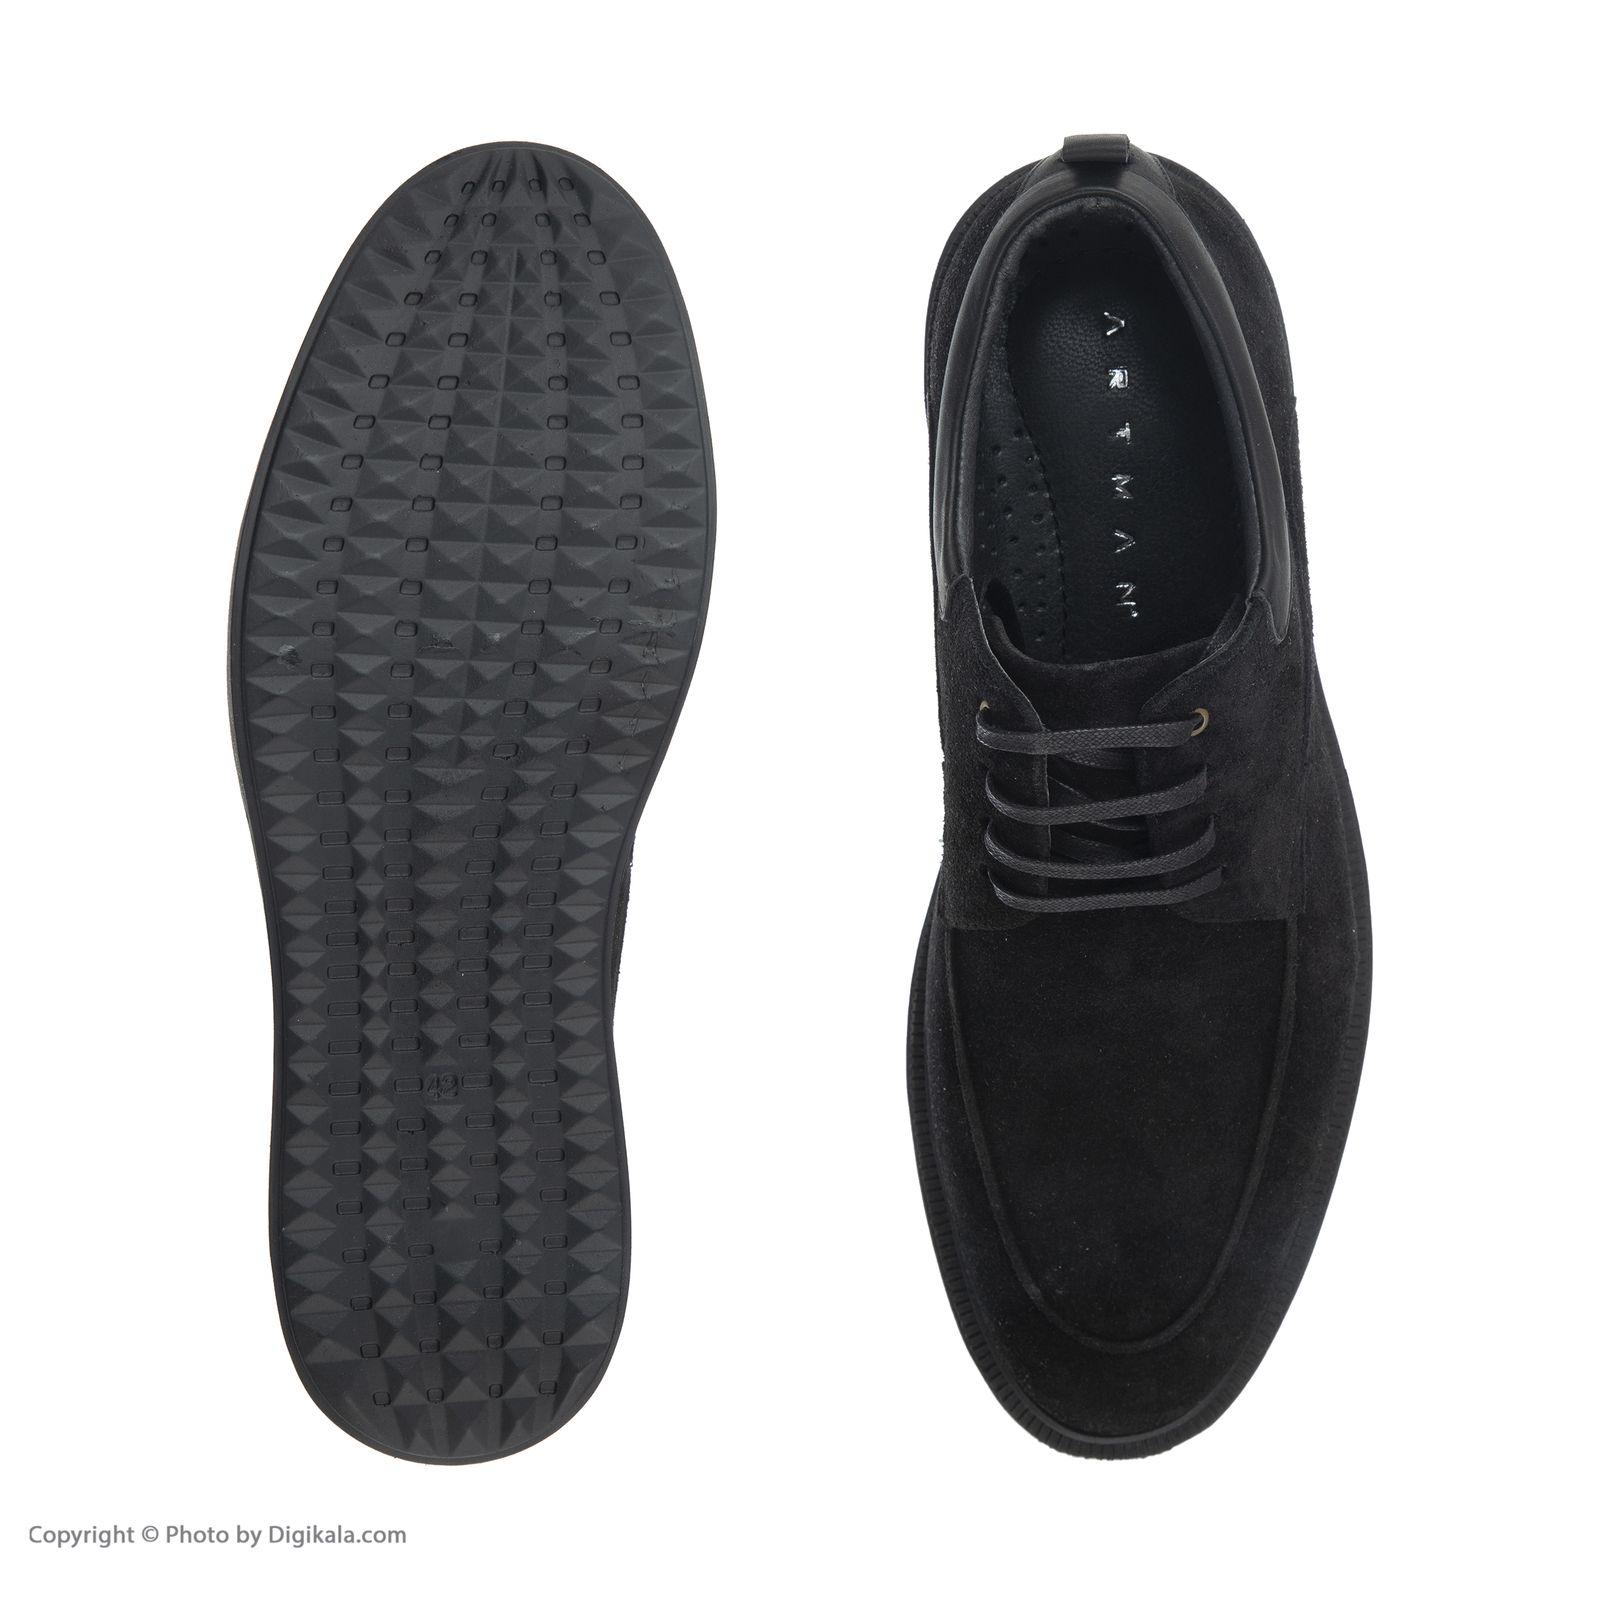  کفش روزمره مردانه آرتمن مدل Anders-41820 -  - 3